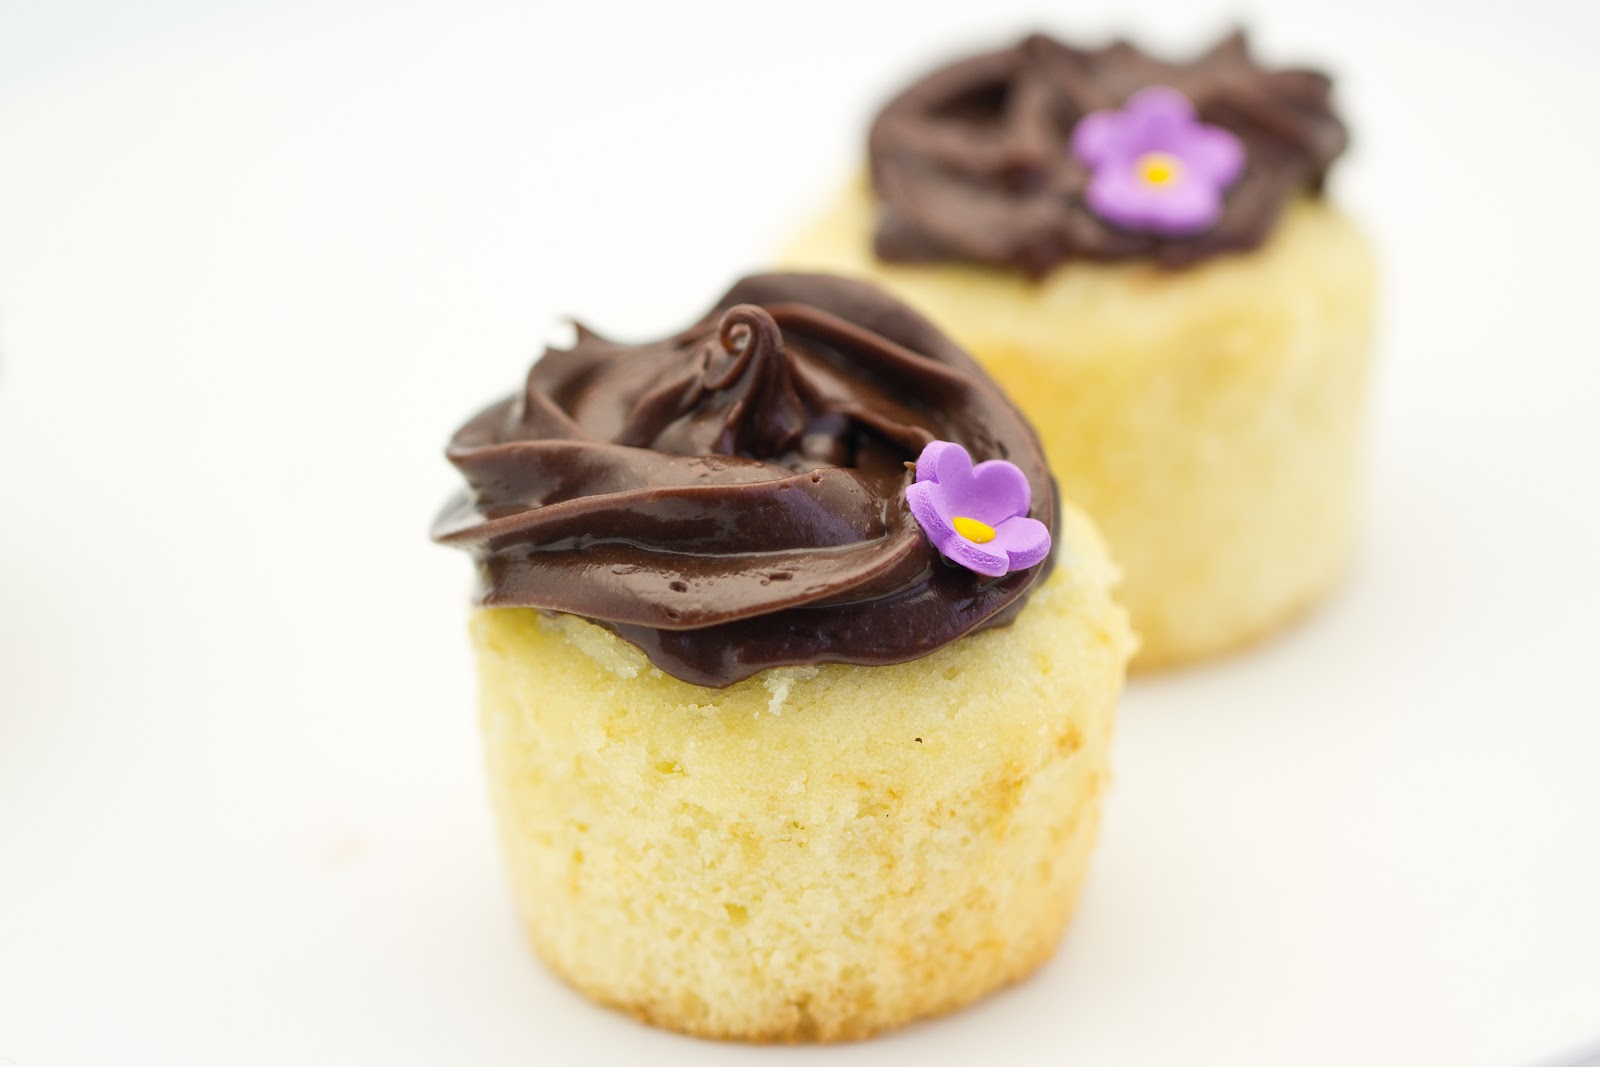 chocolate cupcakes with vanilla icing  av vanilj och choklad sweet little cupcakes with vanilla and chocolate